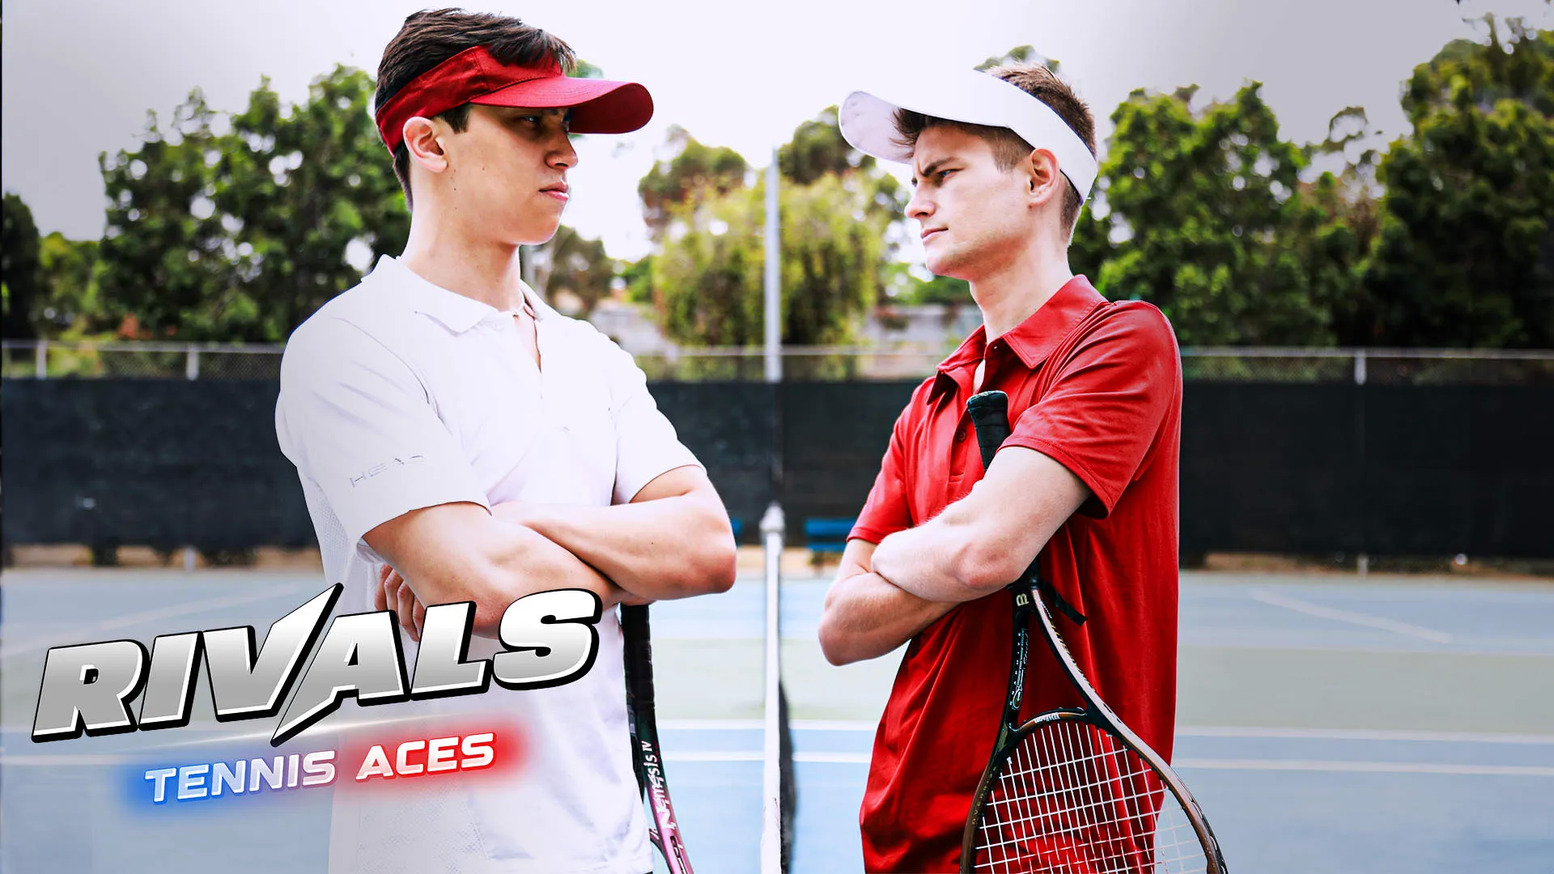 Rivals: Tennis Aces